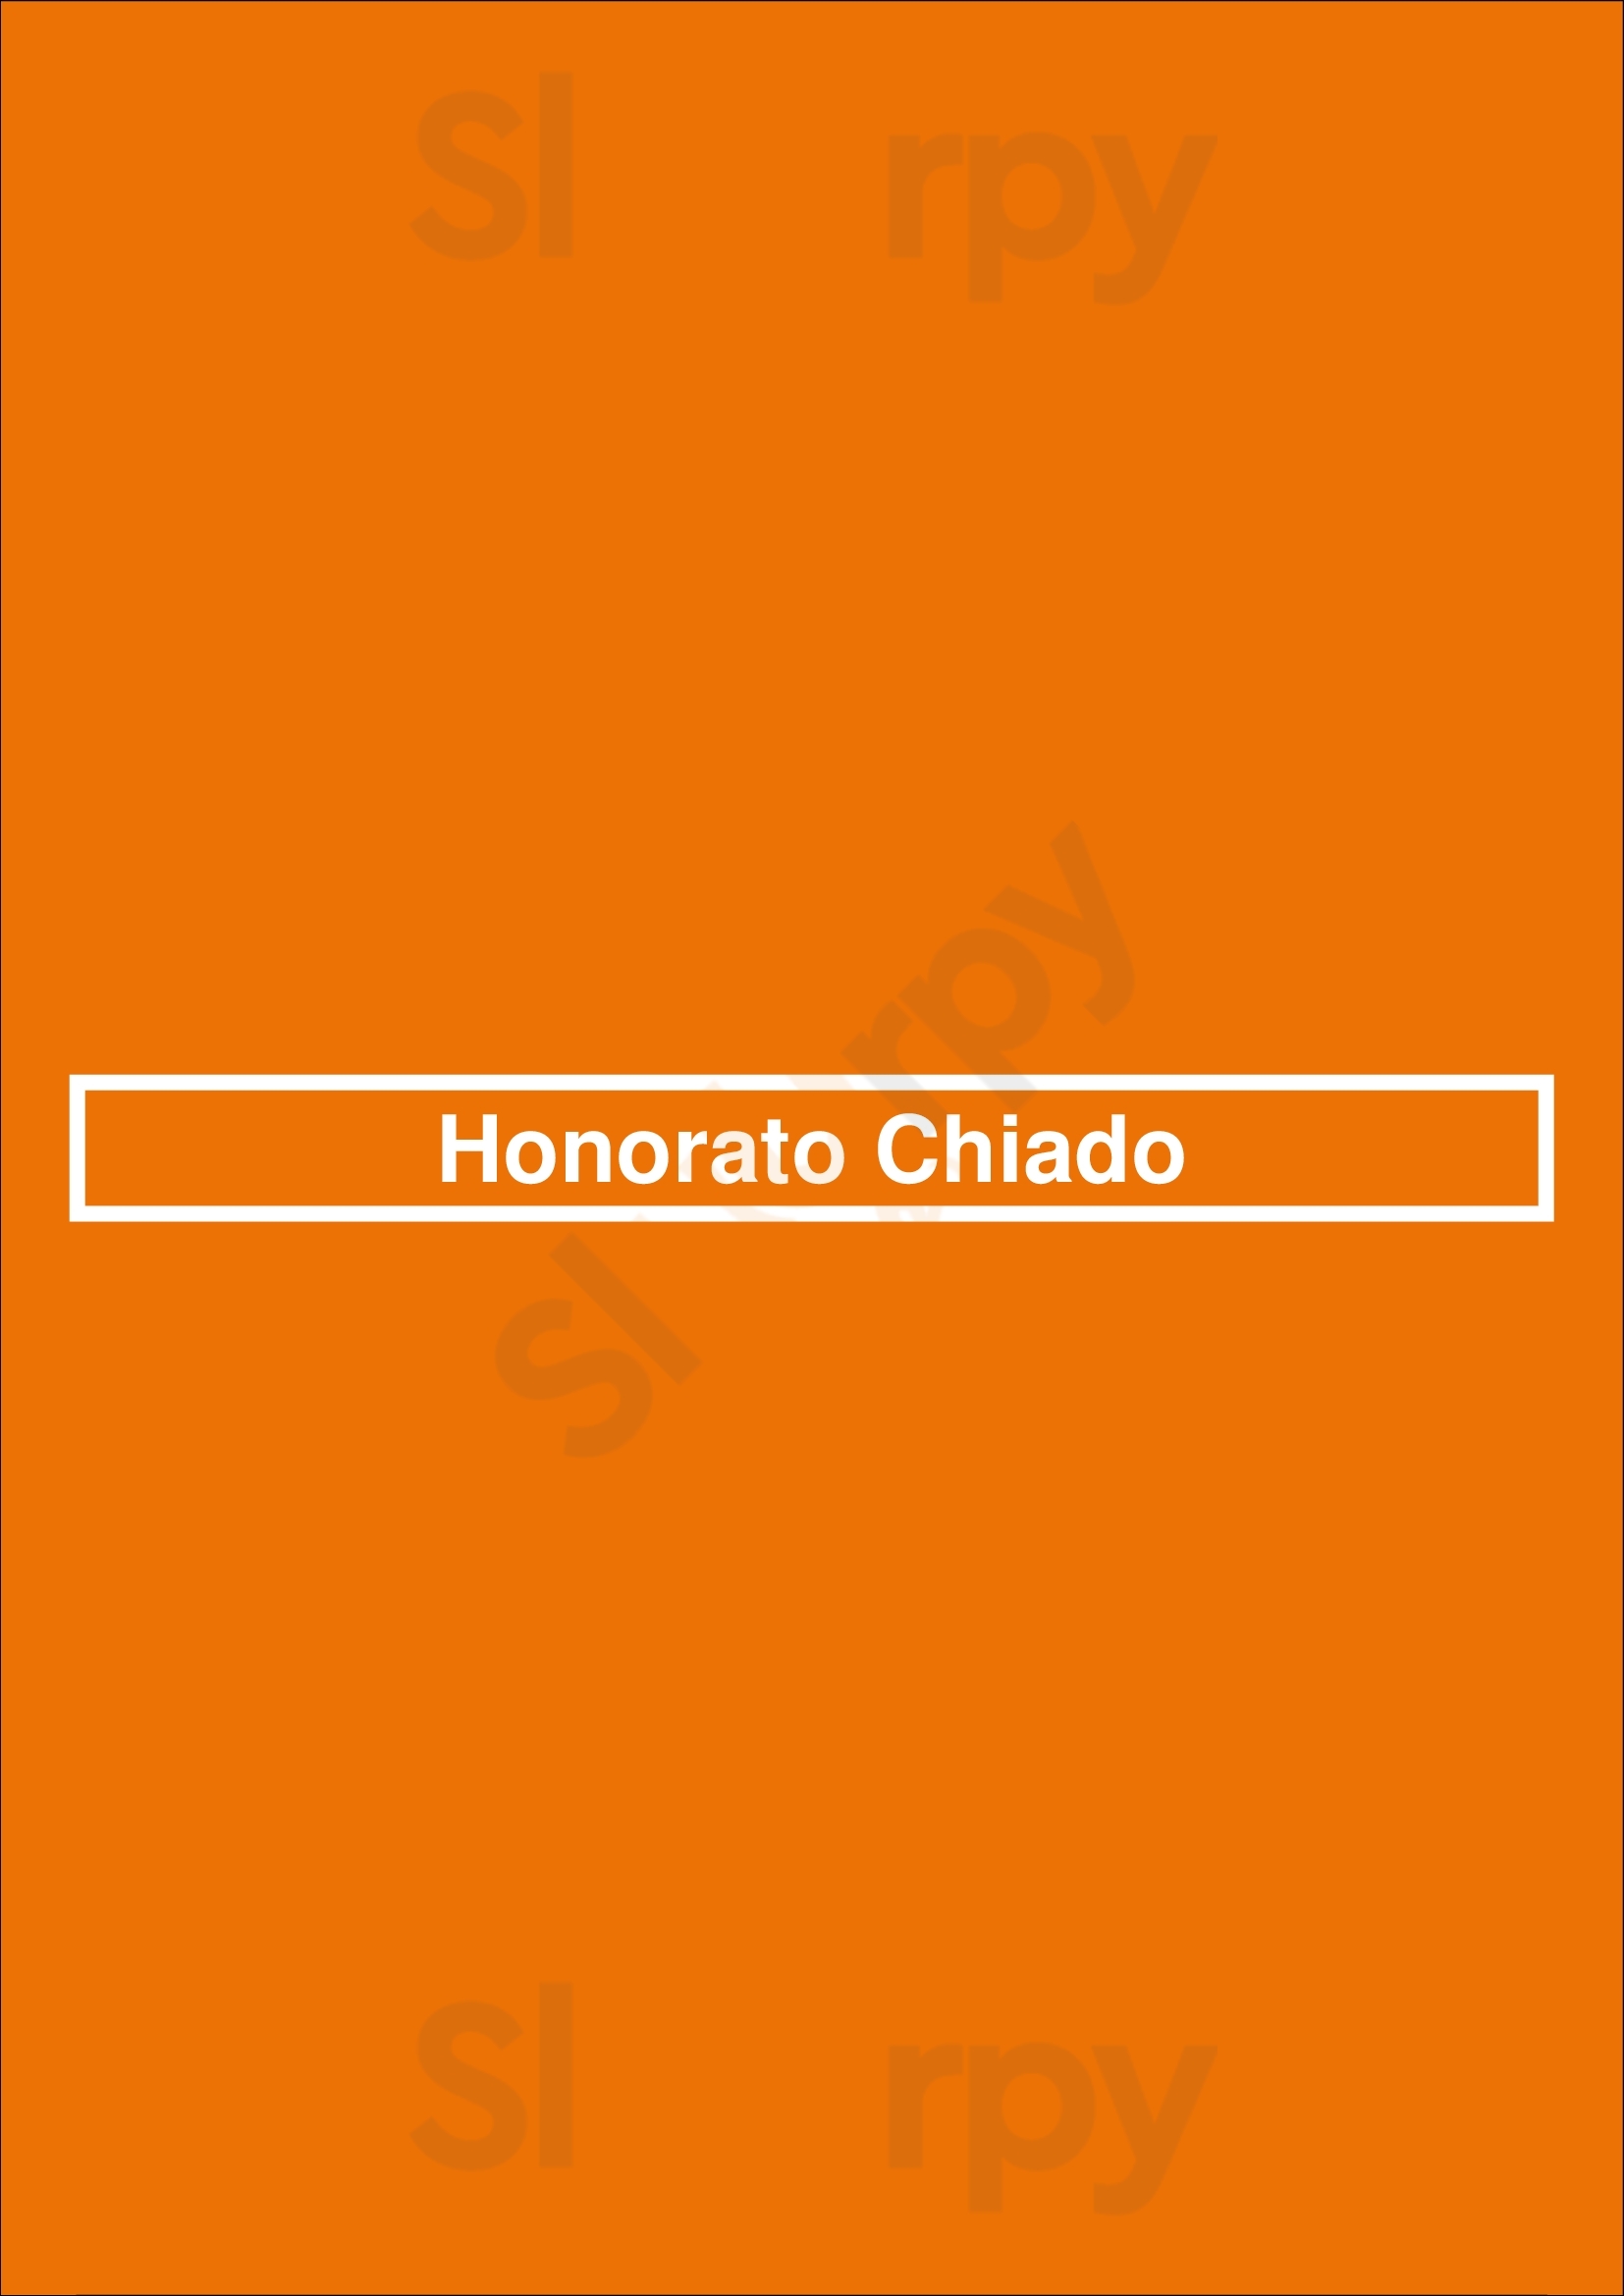 Honorato Chiado Lisboa Menu - 1